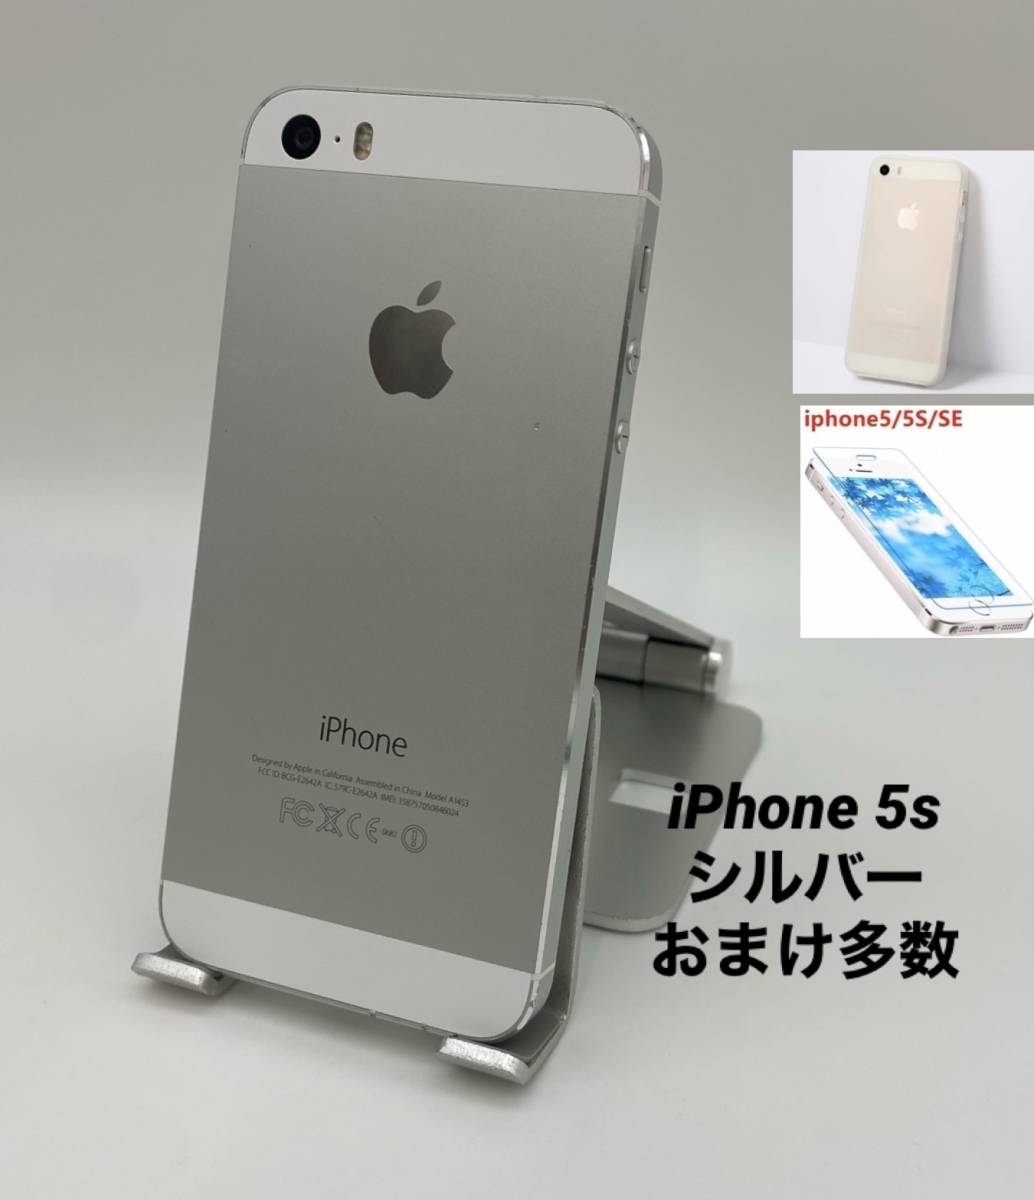 iPhone 5s 32GB Silver シルバー Softbank - 携帯電話